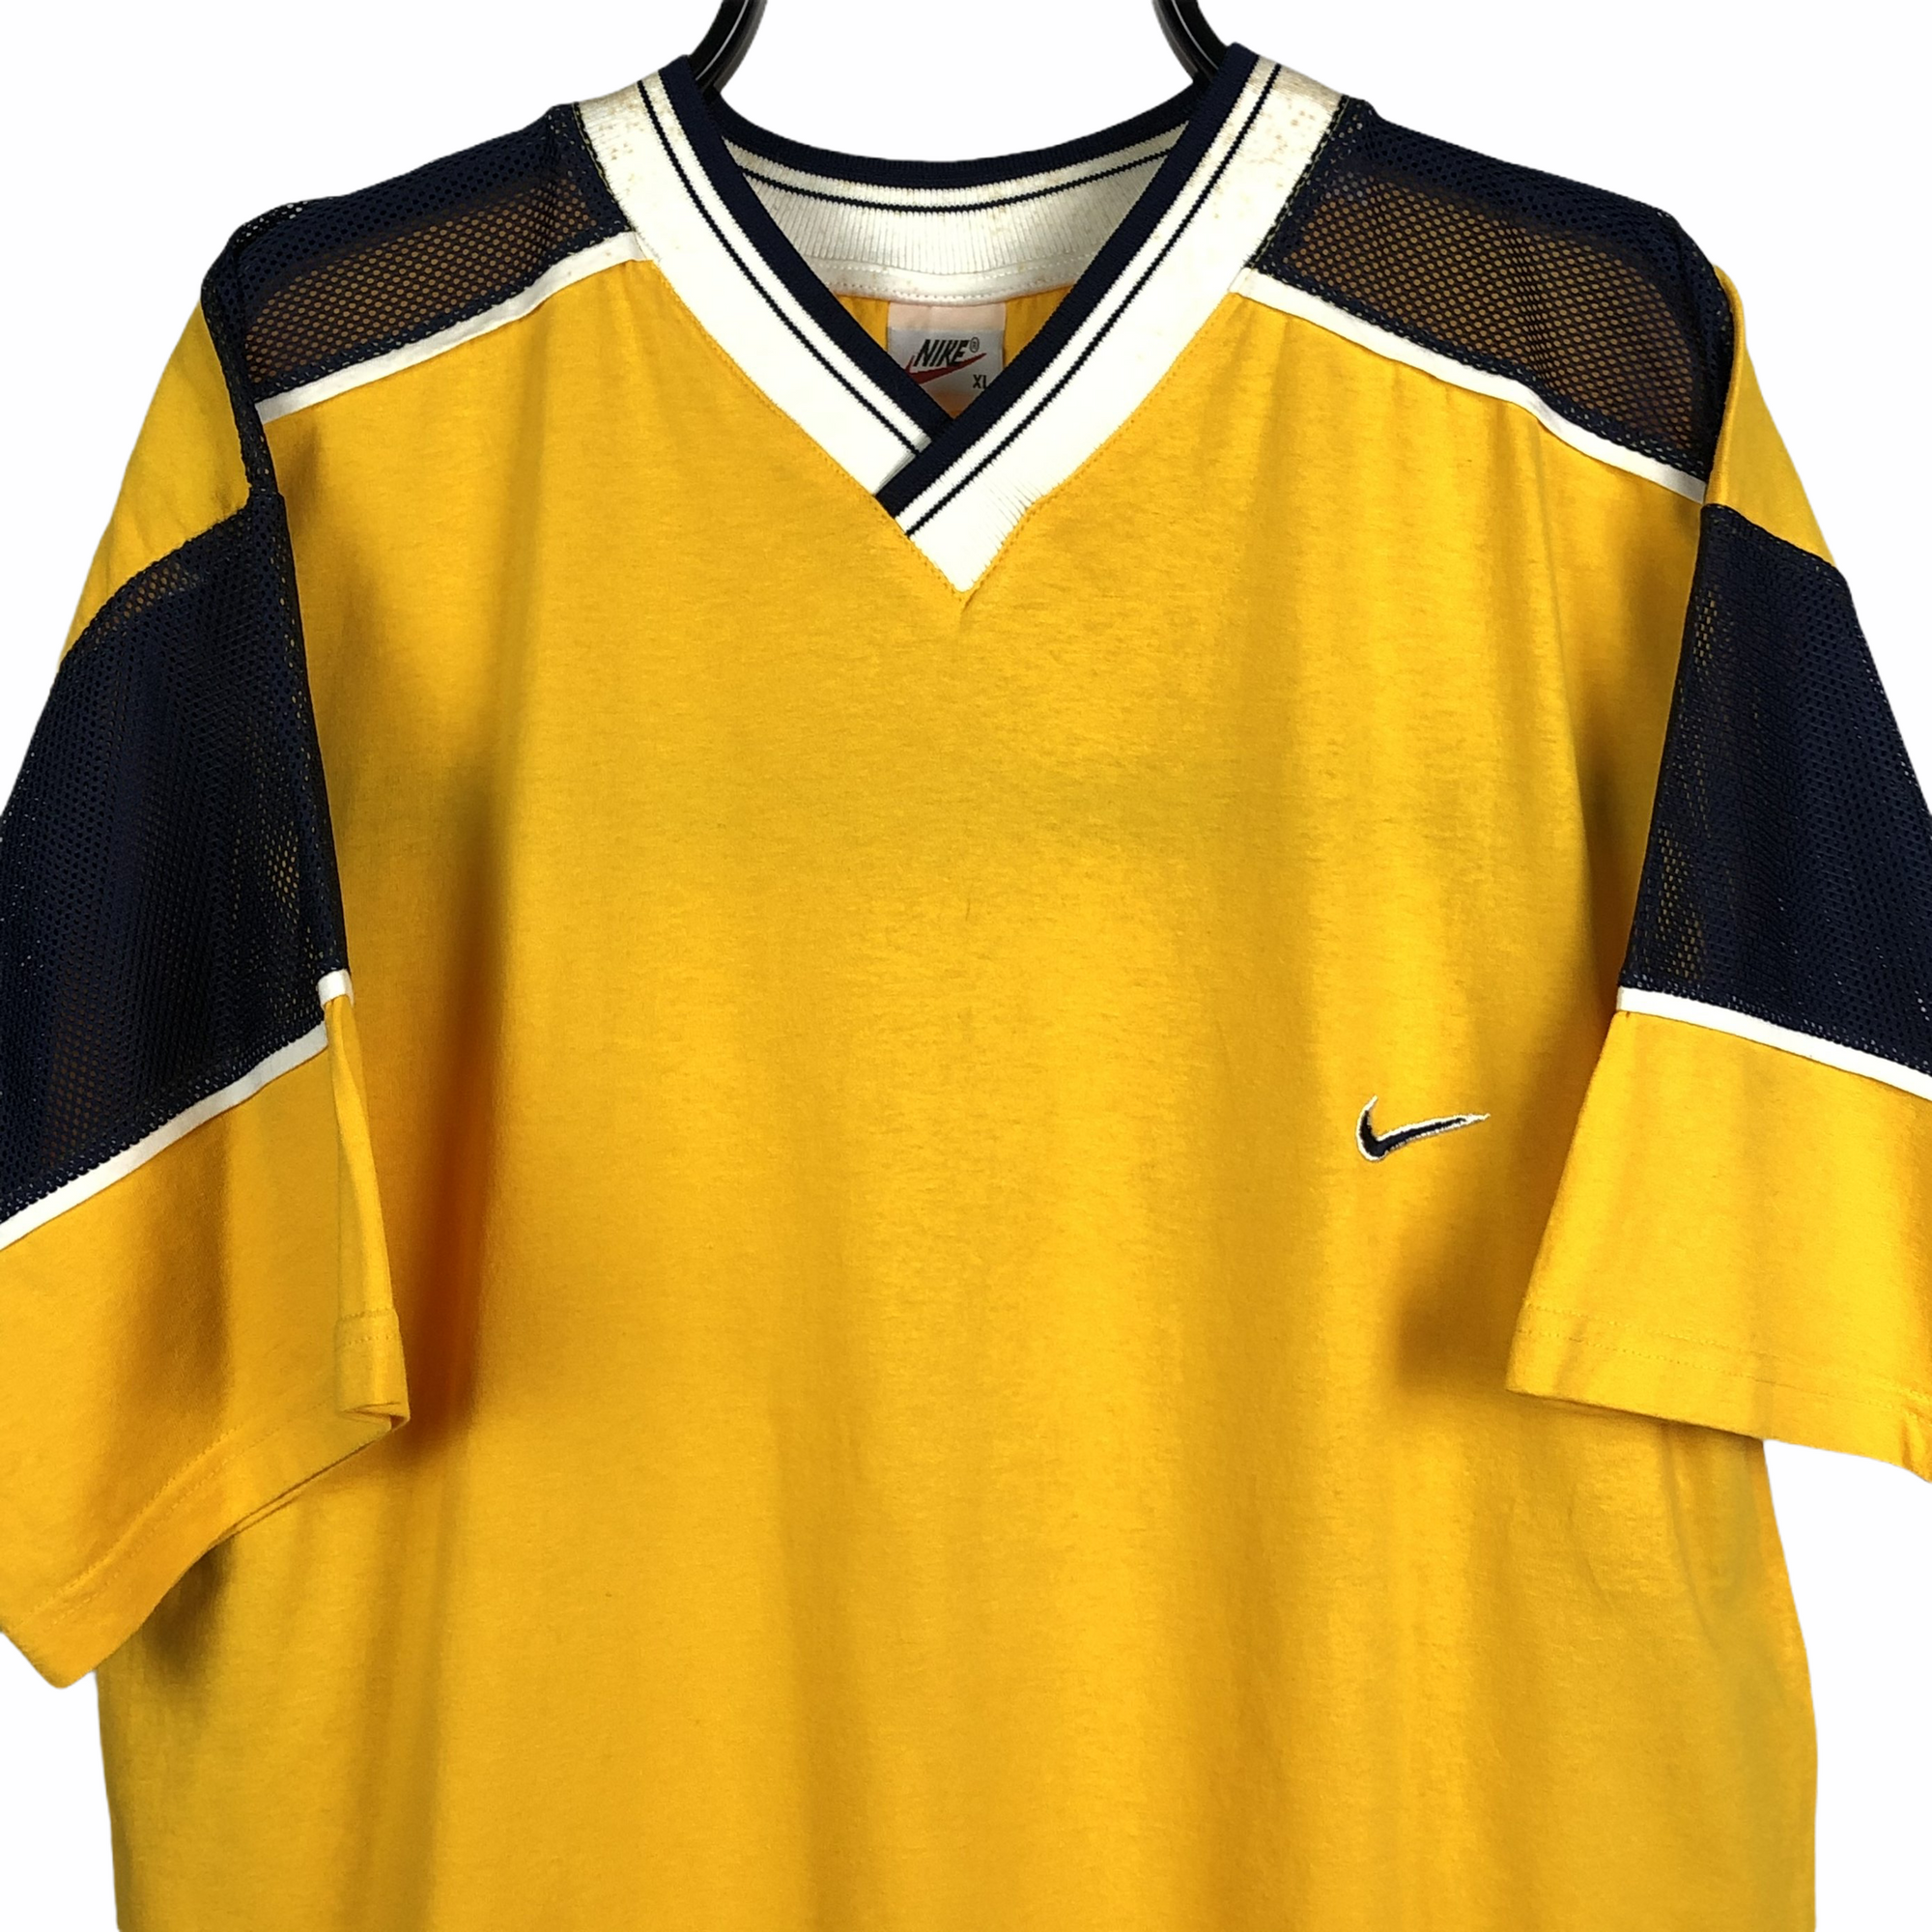 Vintage 90s Nike Embroidered Swoosh Tee in Yellow/Navy - Men's XL/Women's XXL